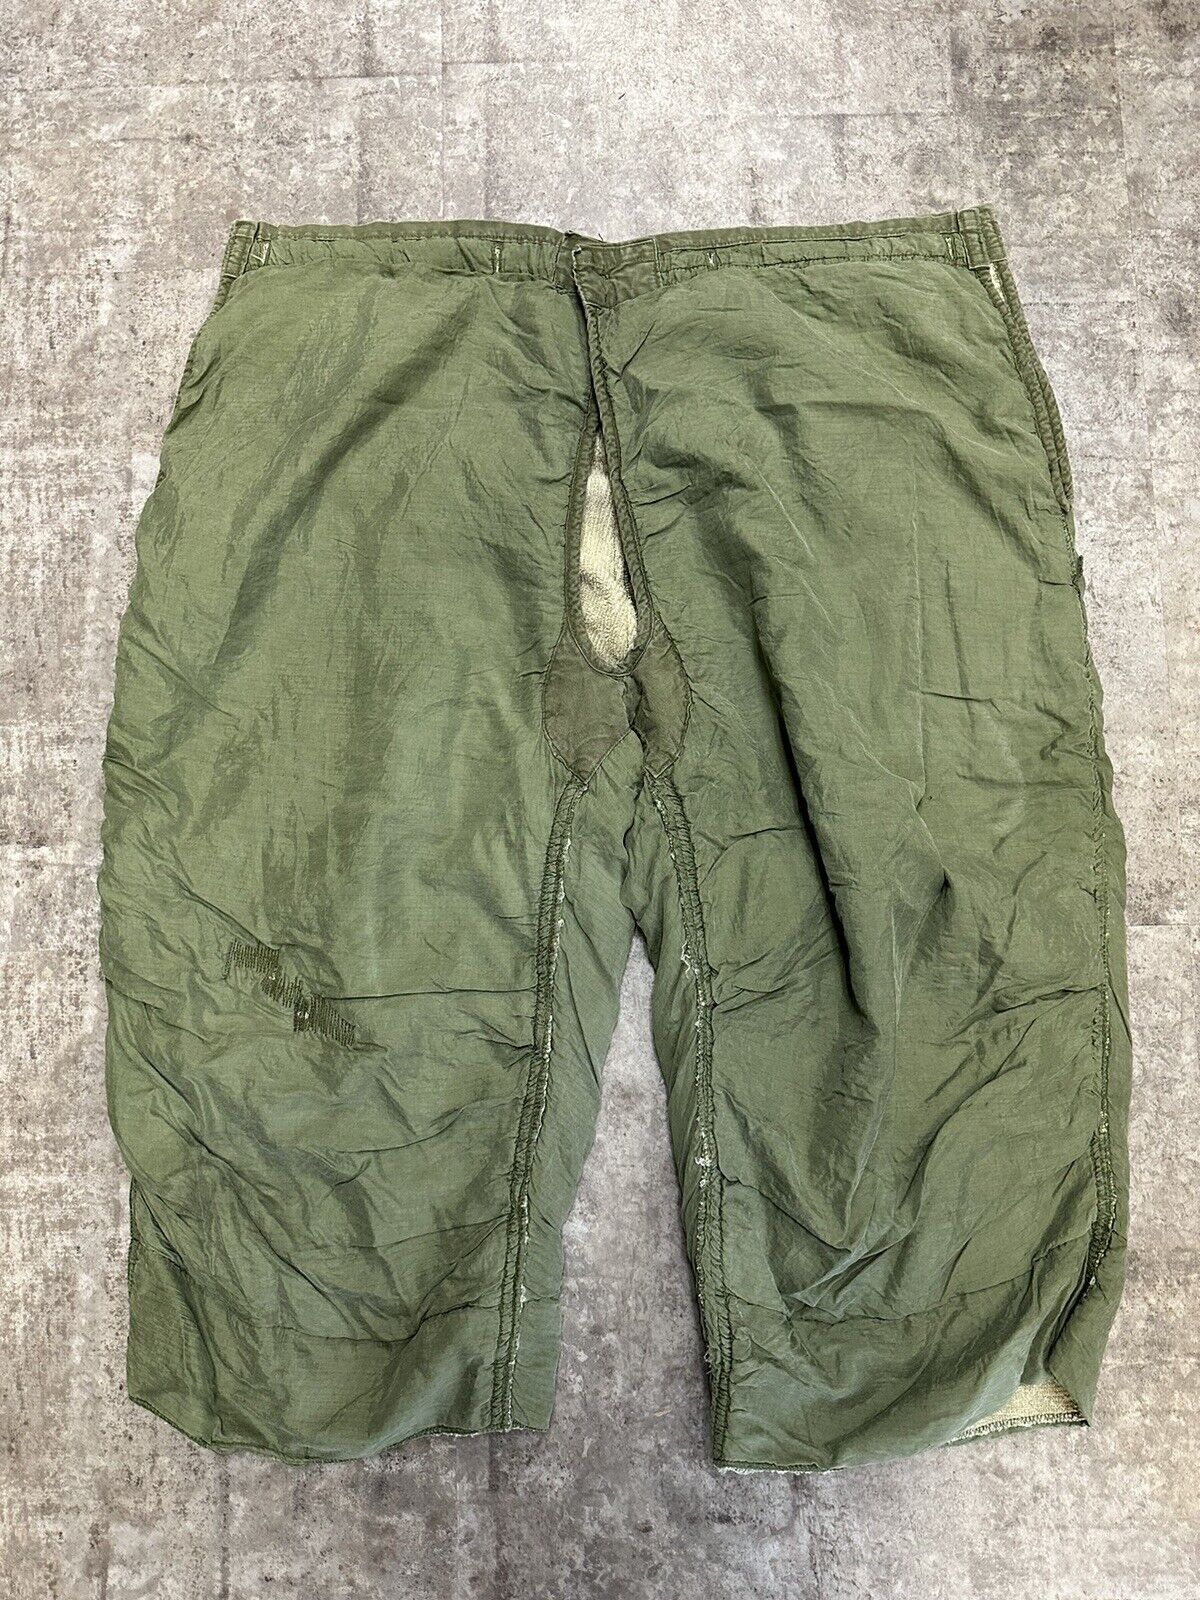 XLARGE US M-1951 Korean War Era Field Trouser Liner Pants Cold Weather M51